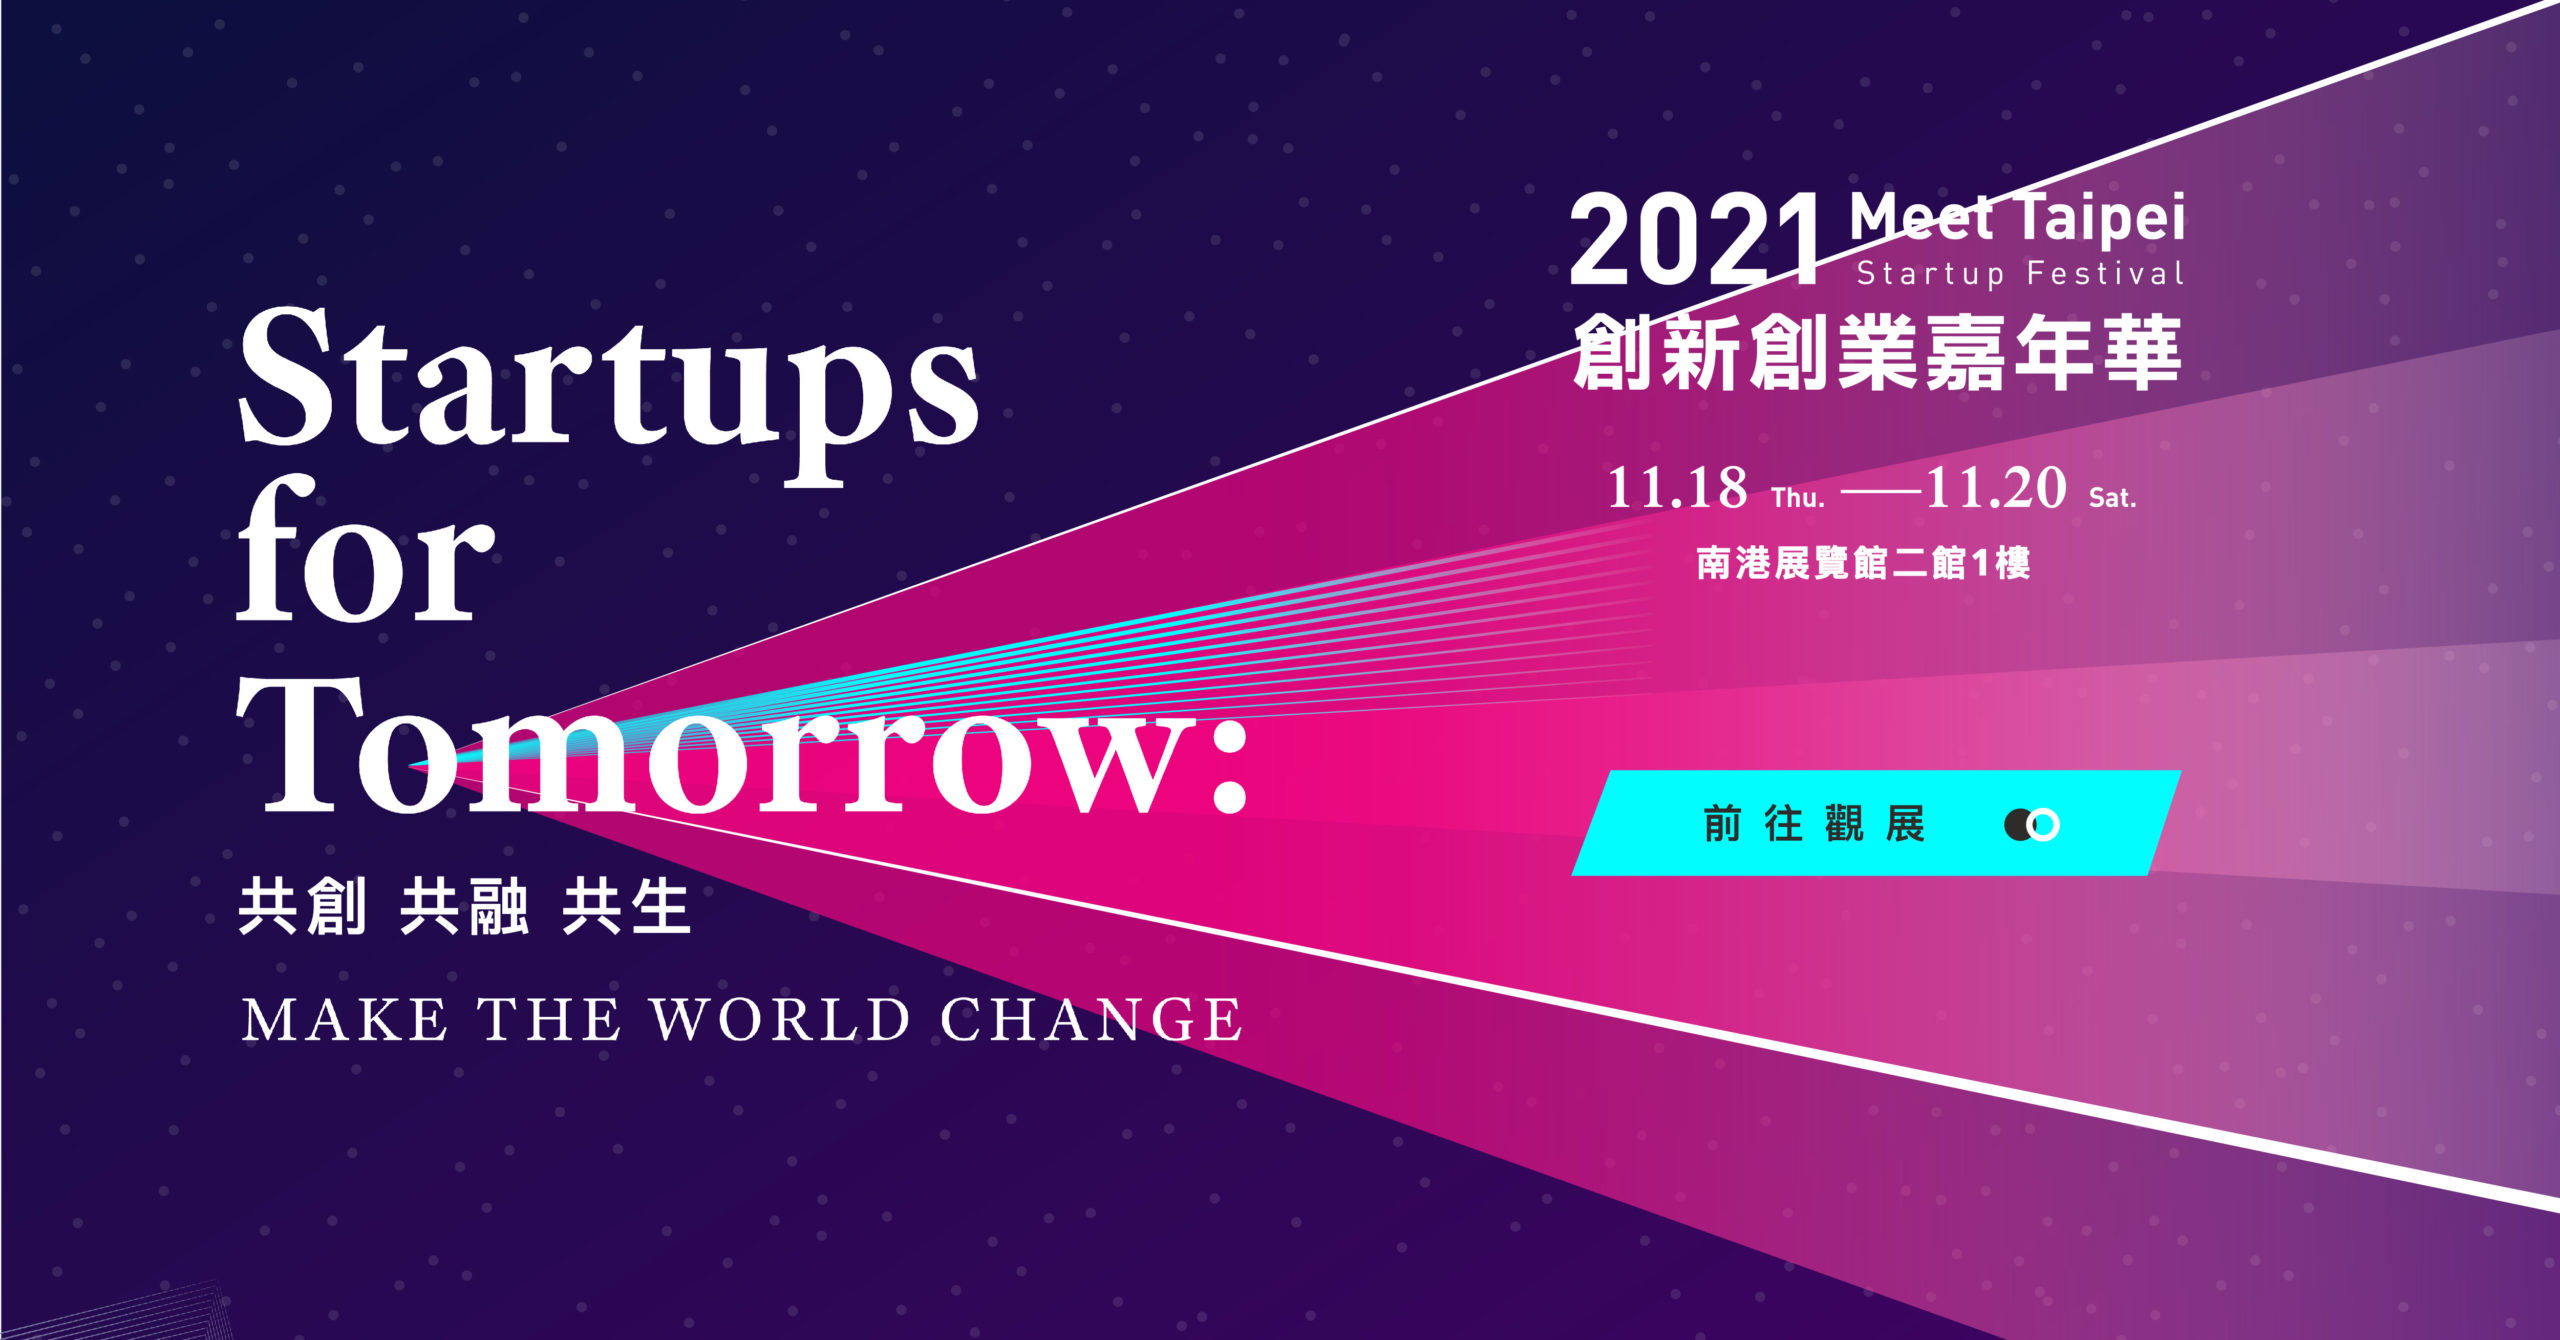 PowerArena to Participate in 2021 Meet Taipei